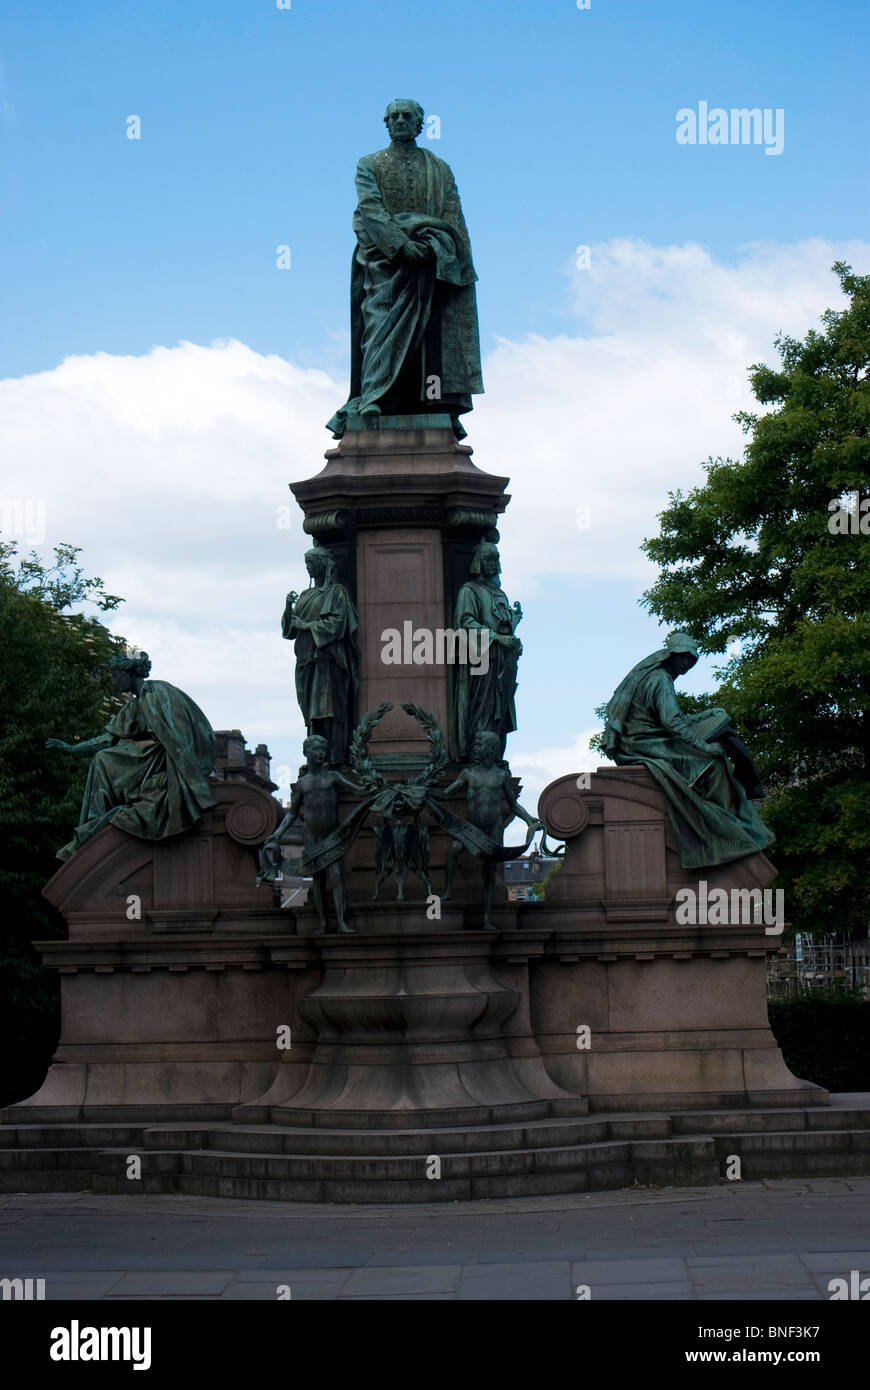 The statue to William Ewart Gladstone (British Prime Minister) in Shandwick Place, Edinburgh, Scotland. Stock Photo